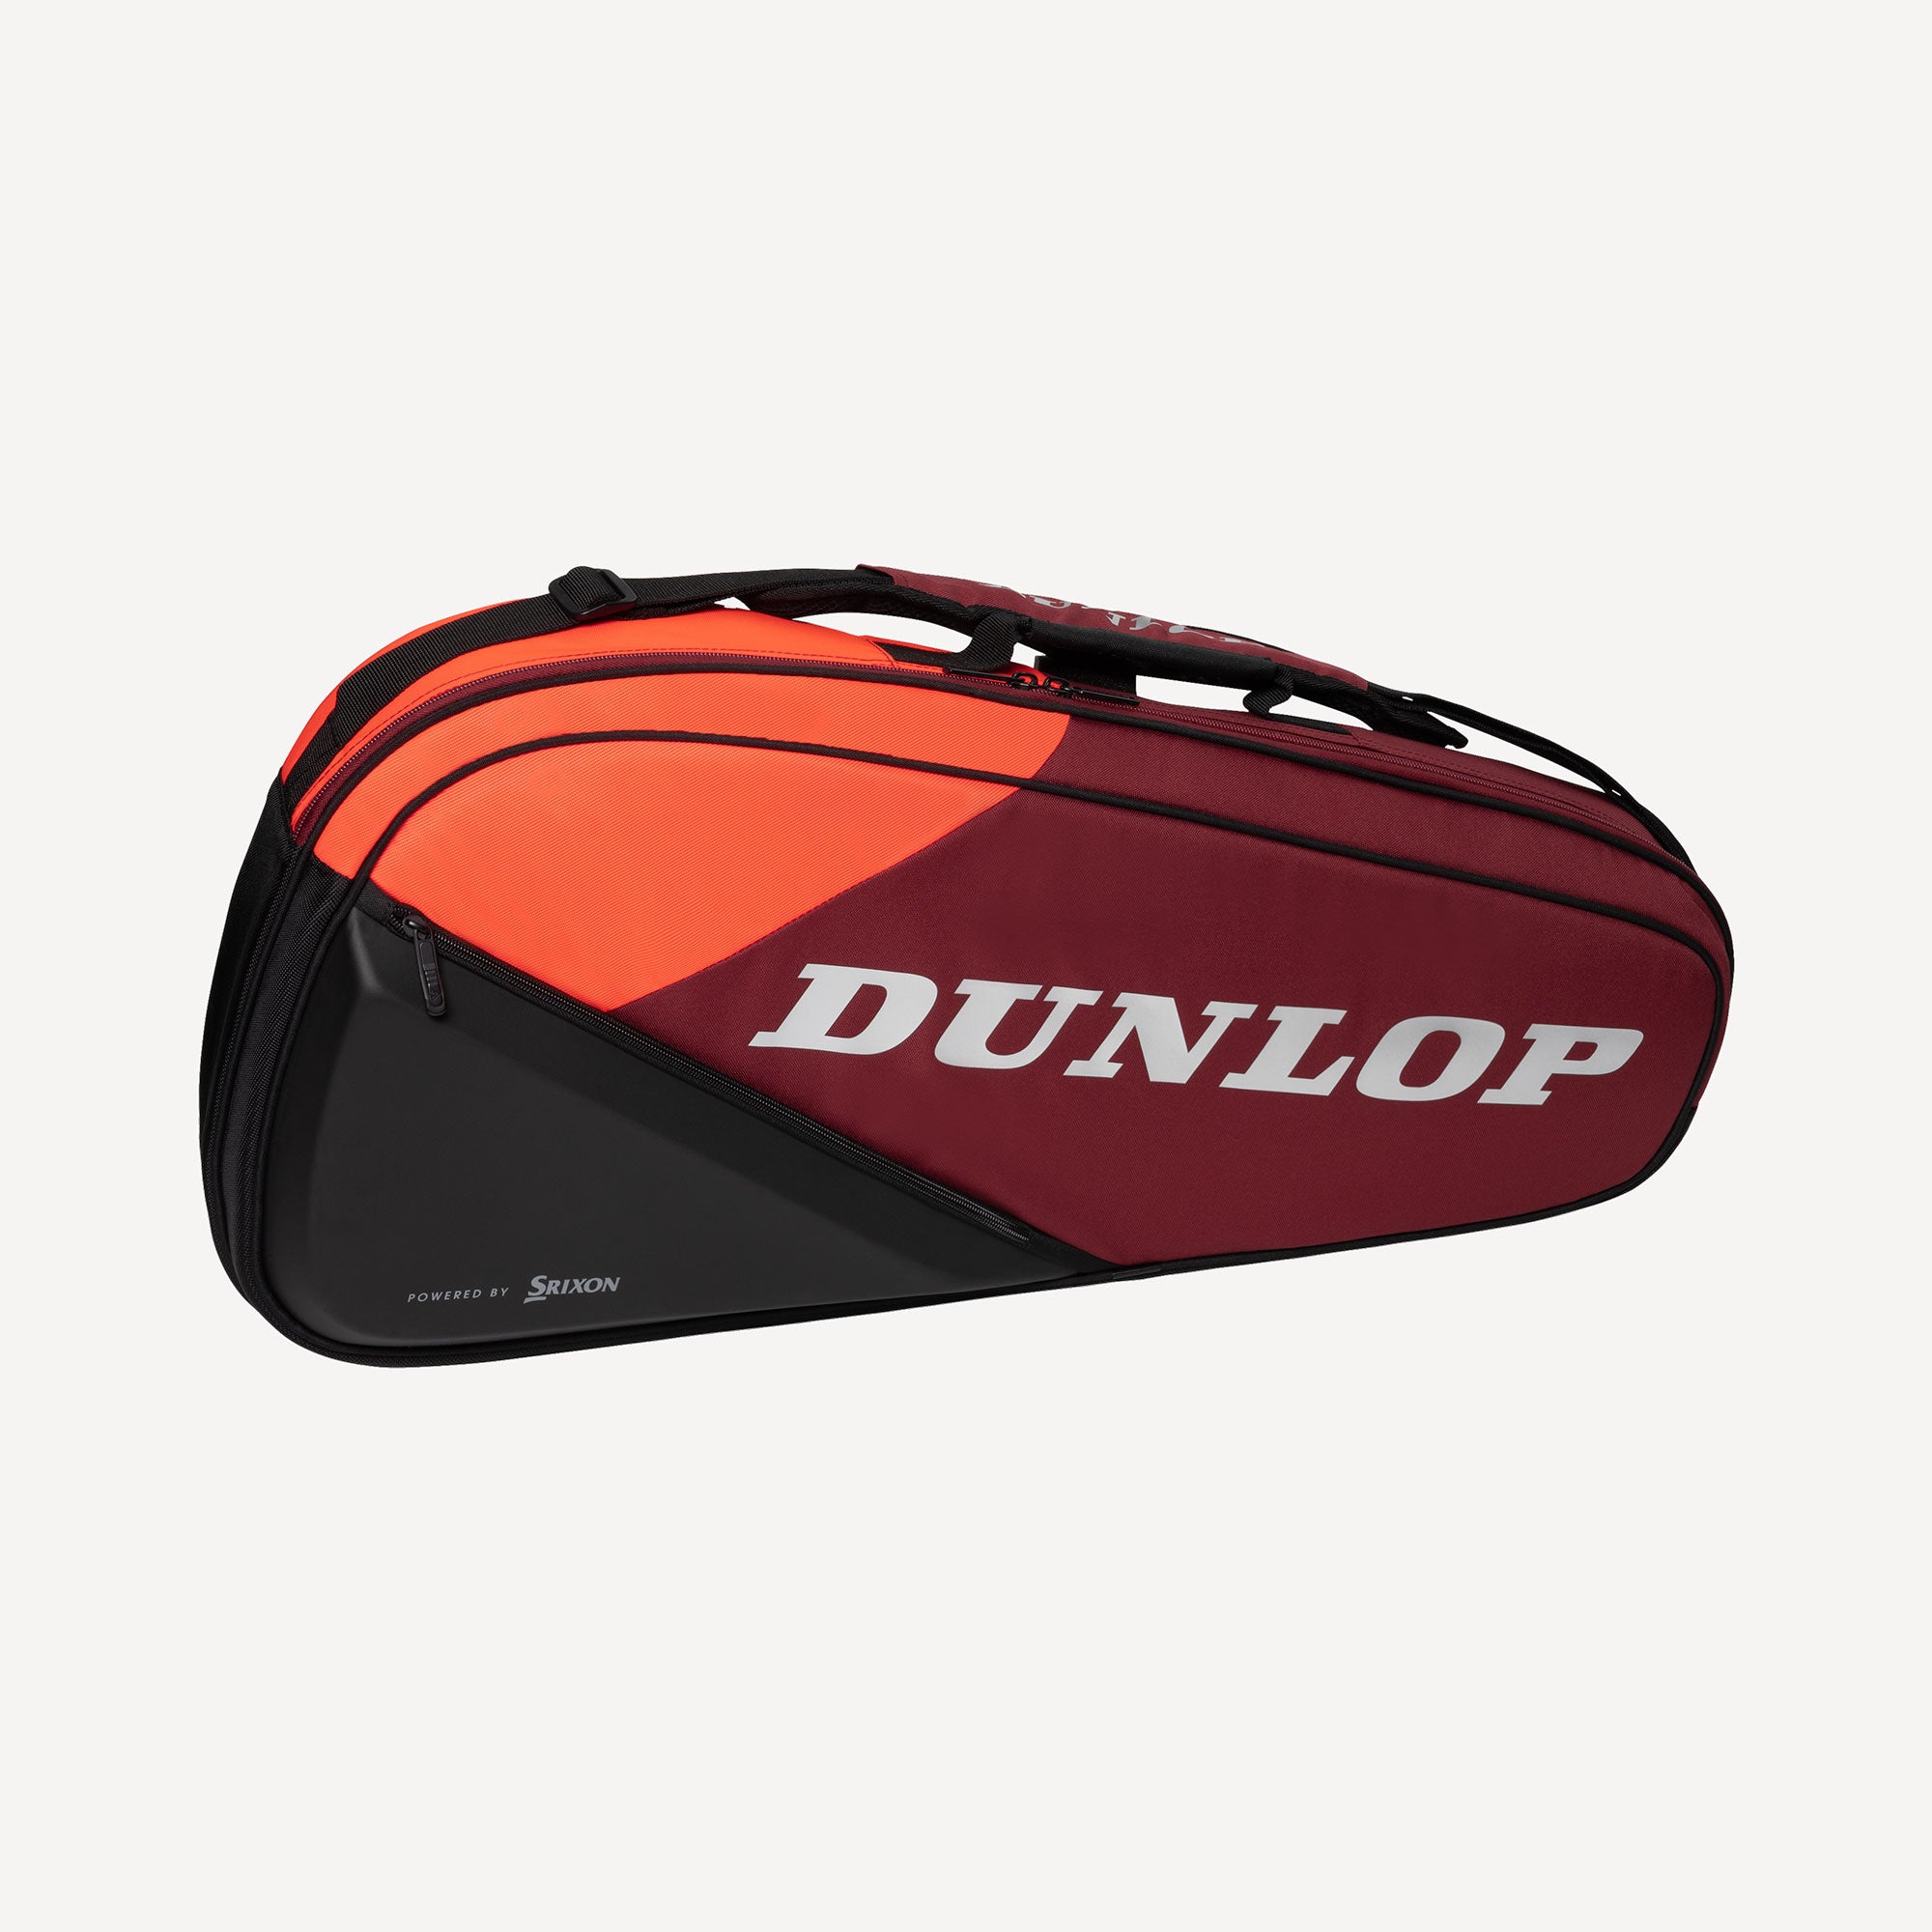 Dunlop CX Club 3 Racket Tennis Bag - Red (1)